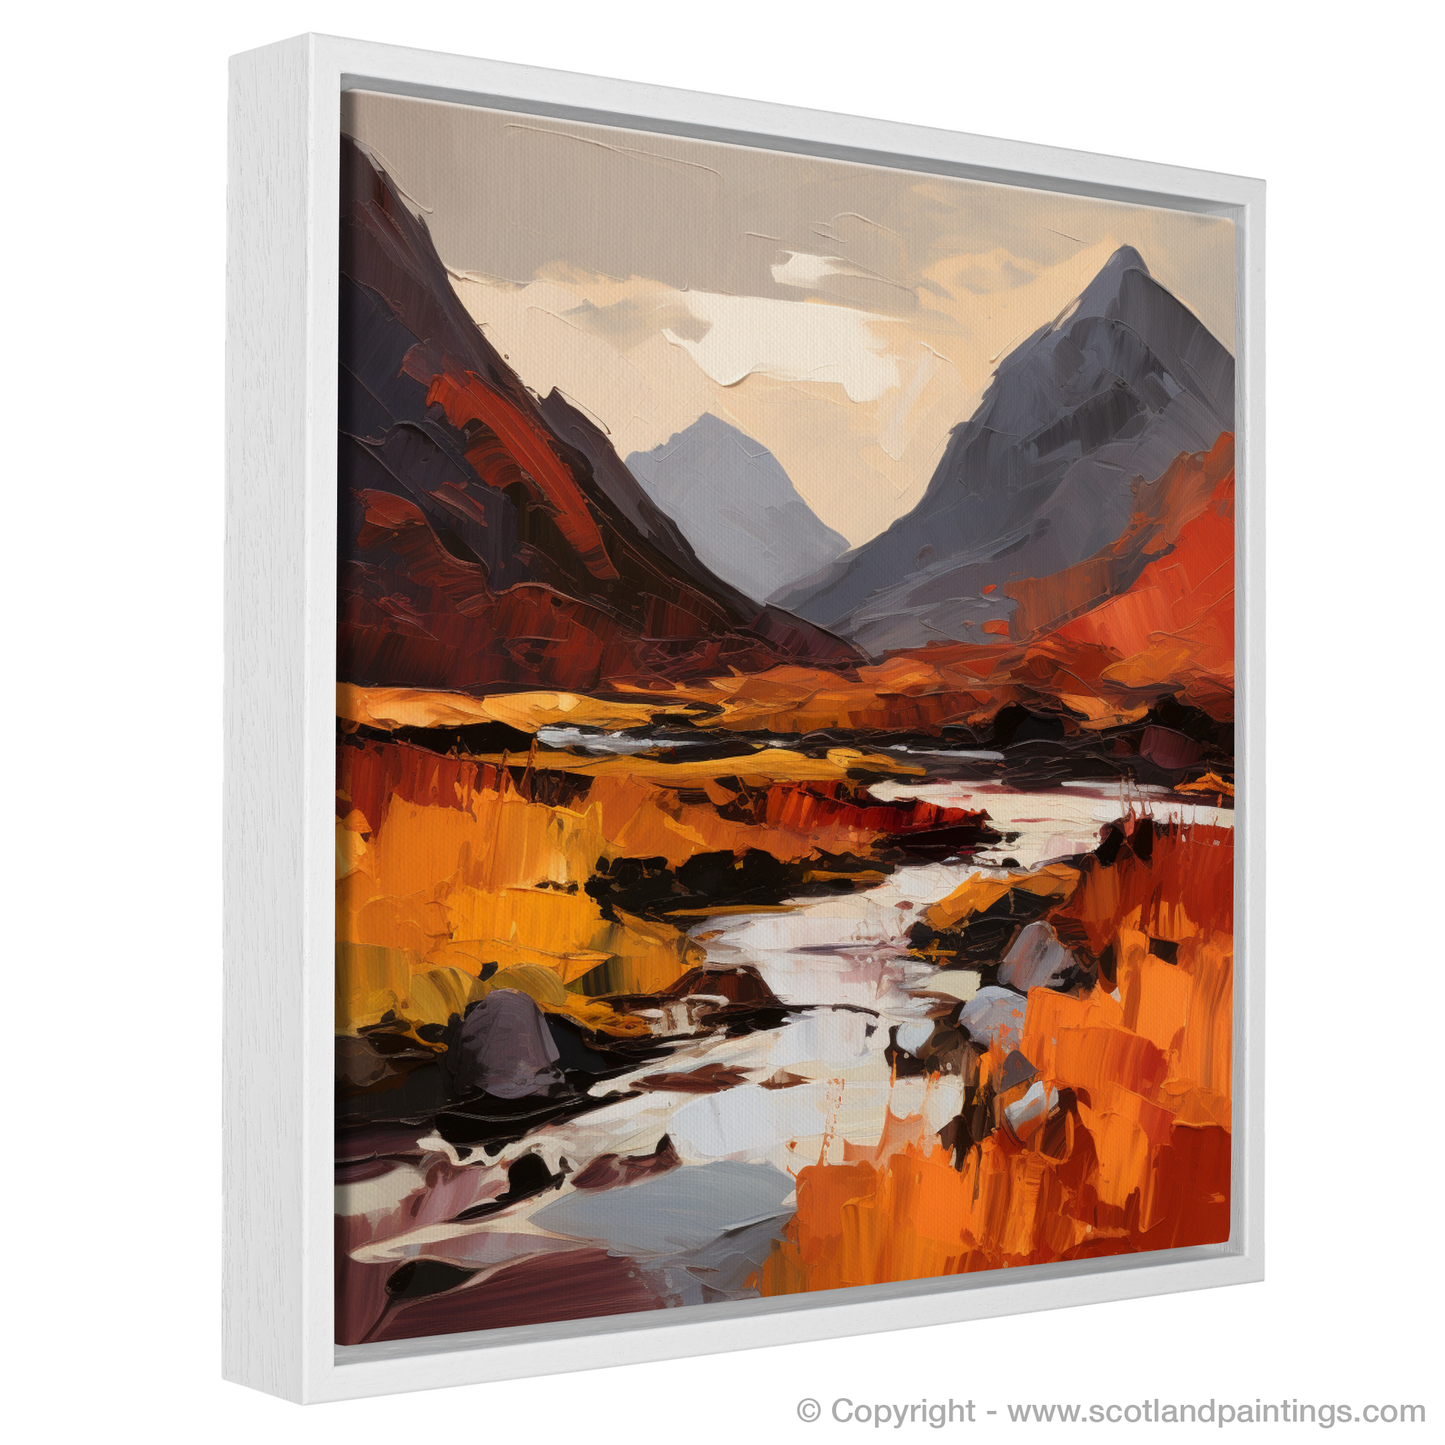 Painting and Art Print of Autumn hues in Glencoe entitled "Autumn Symphony in Glencoe".